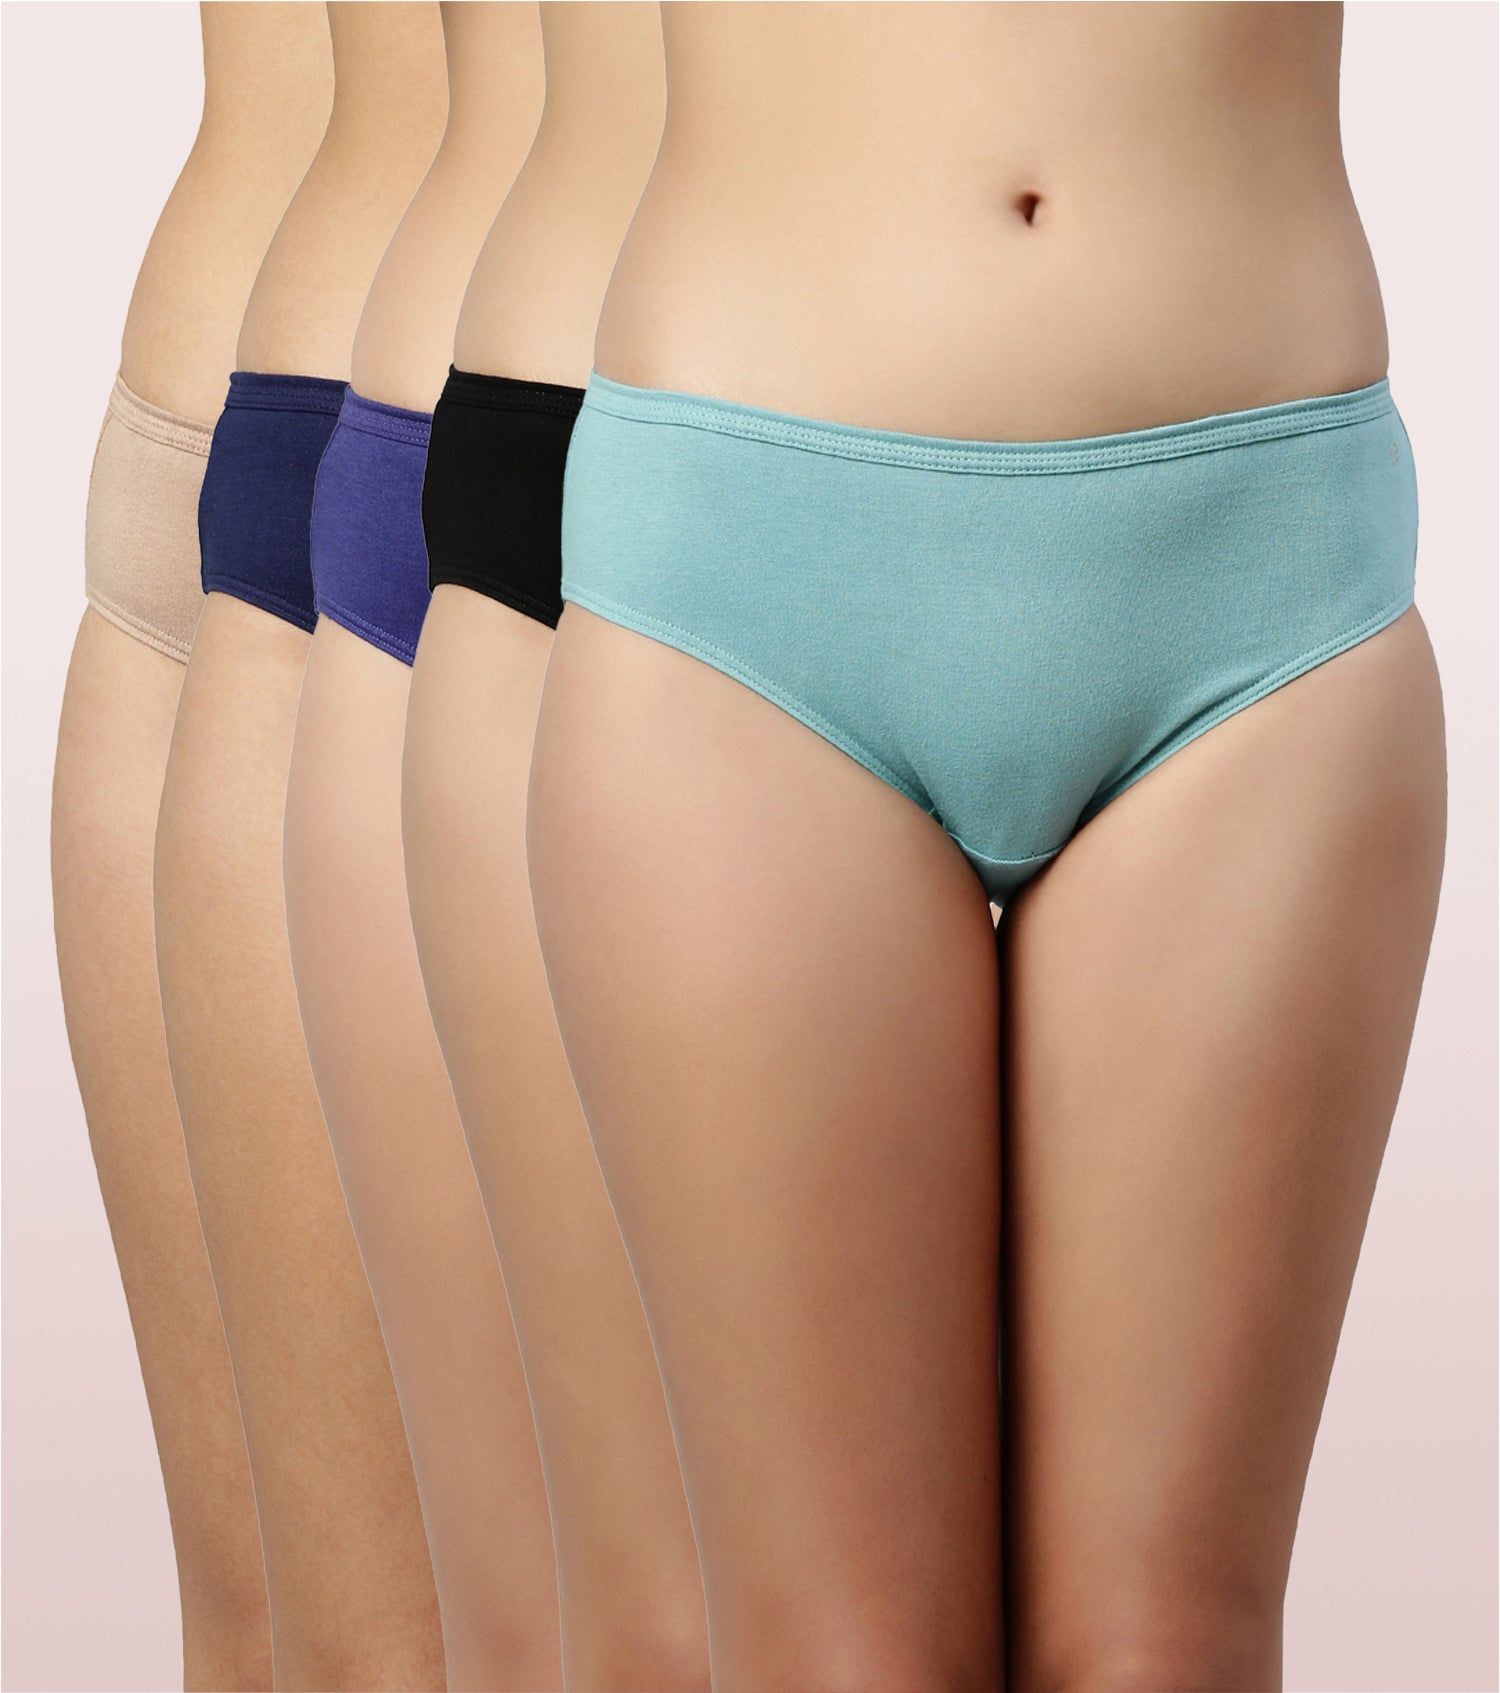 Women's Assorted Classic Nylon Panties Full Cut Briefs Size 5 (3